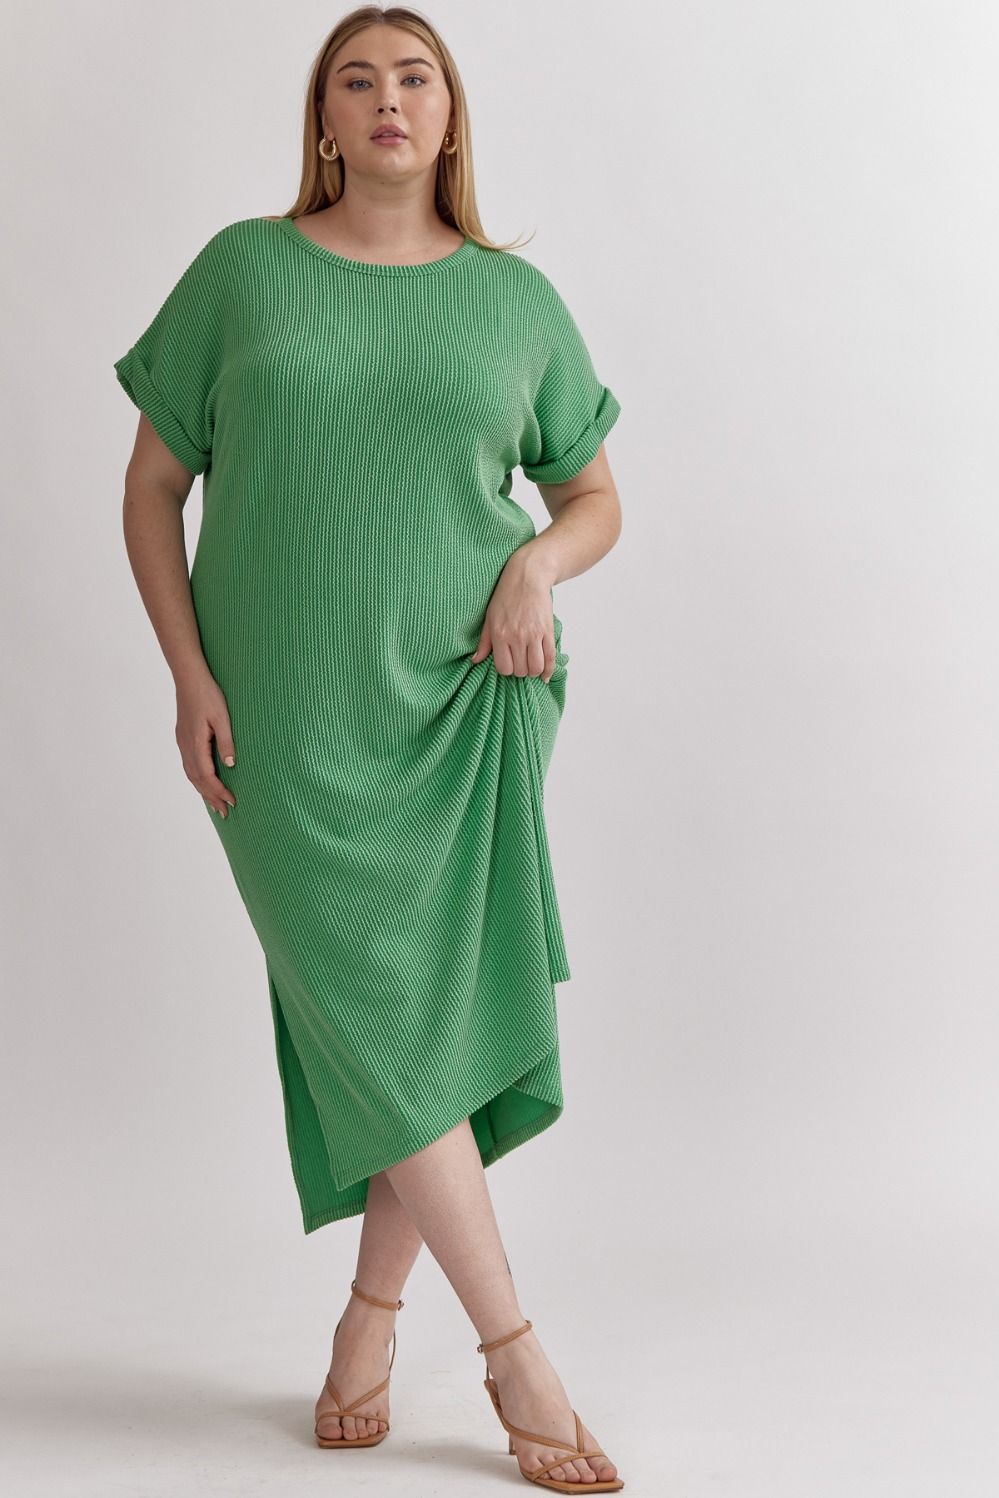 The Retreat Dress - Green